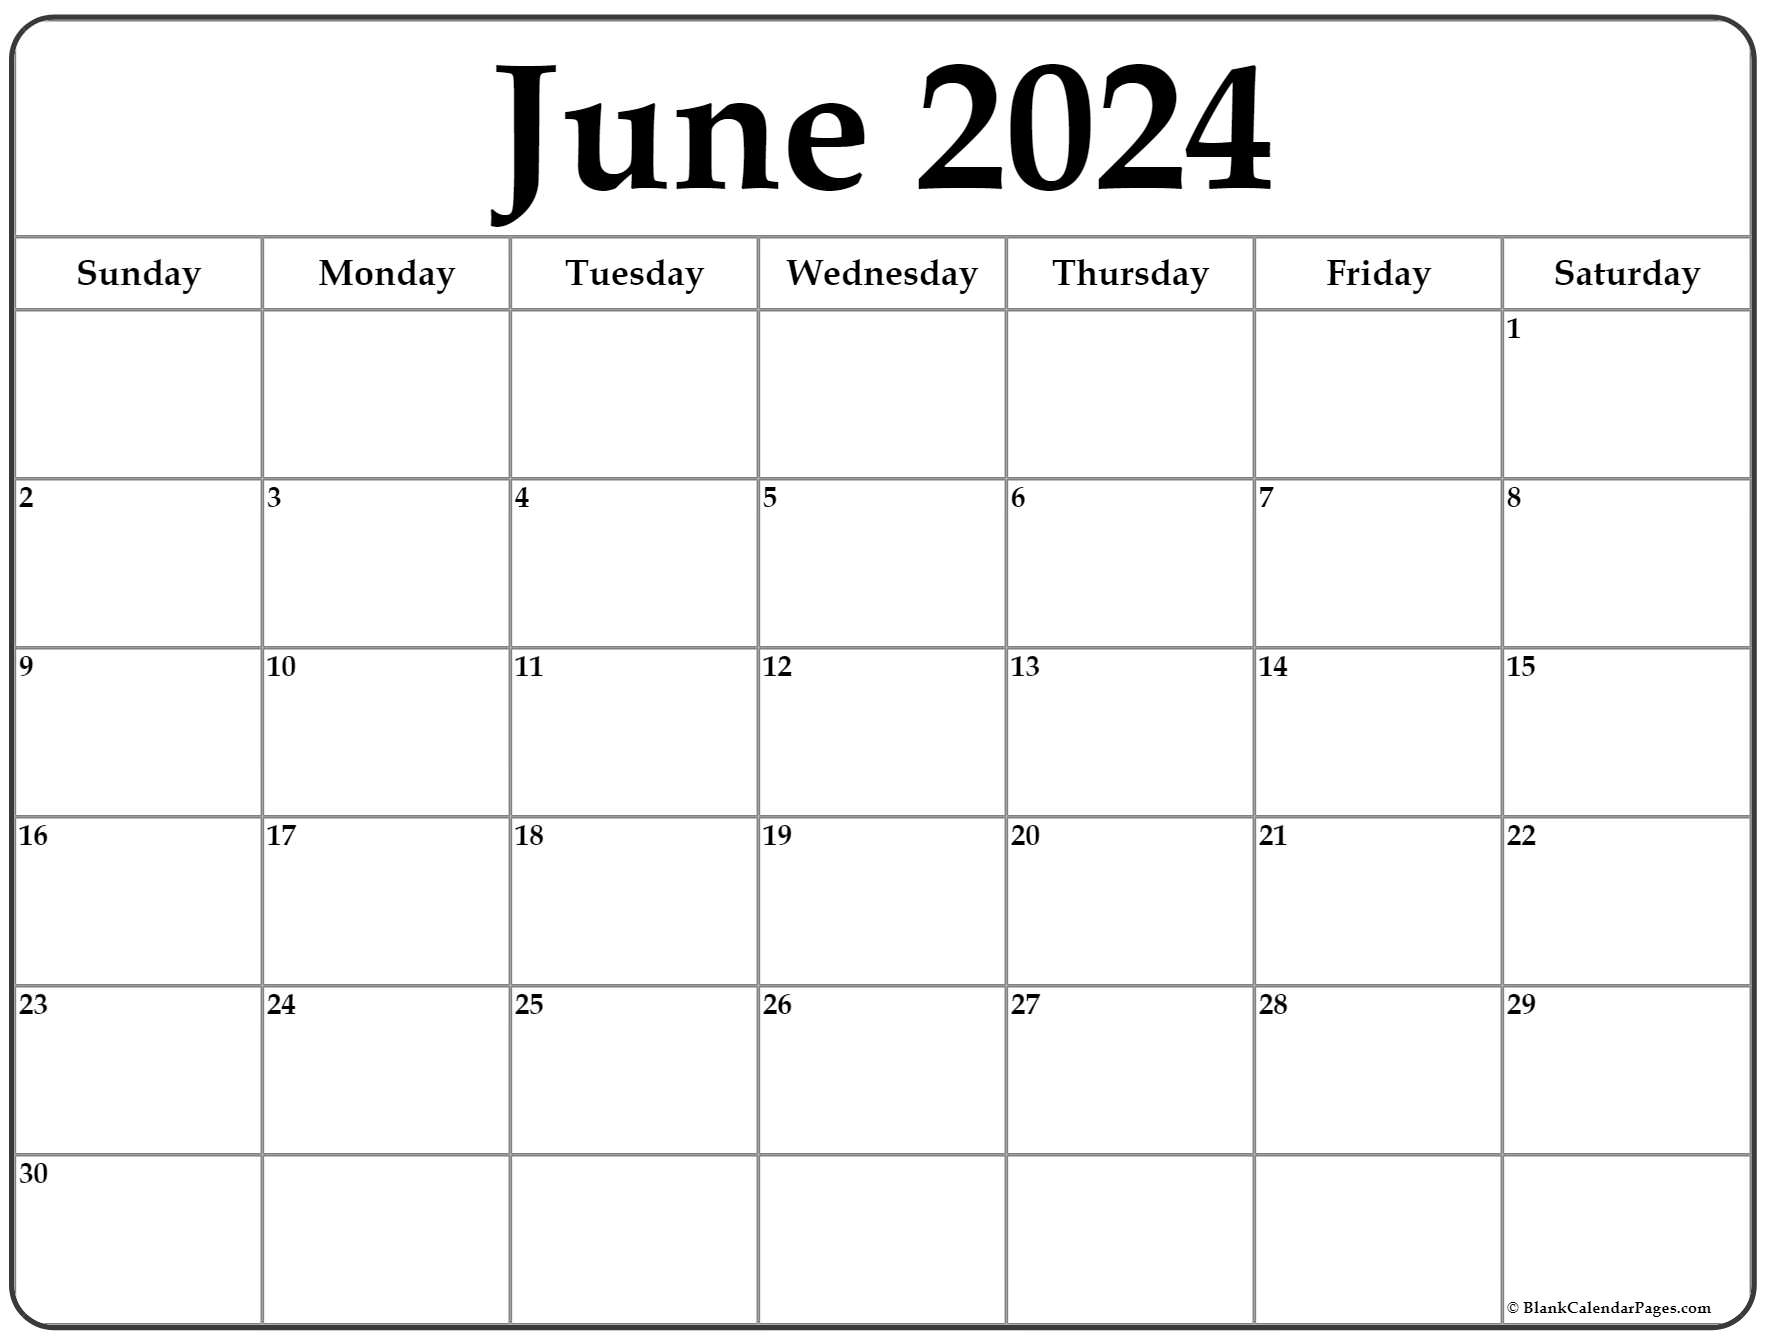 June 2022 Calendar With Holidays June 2022 Calendar | Free Printable Calendar Templates